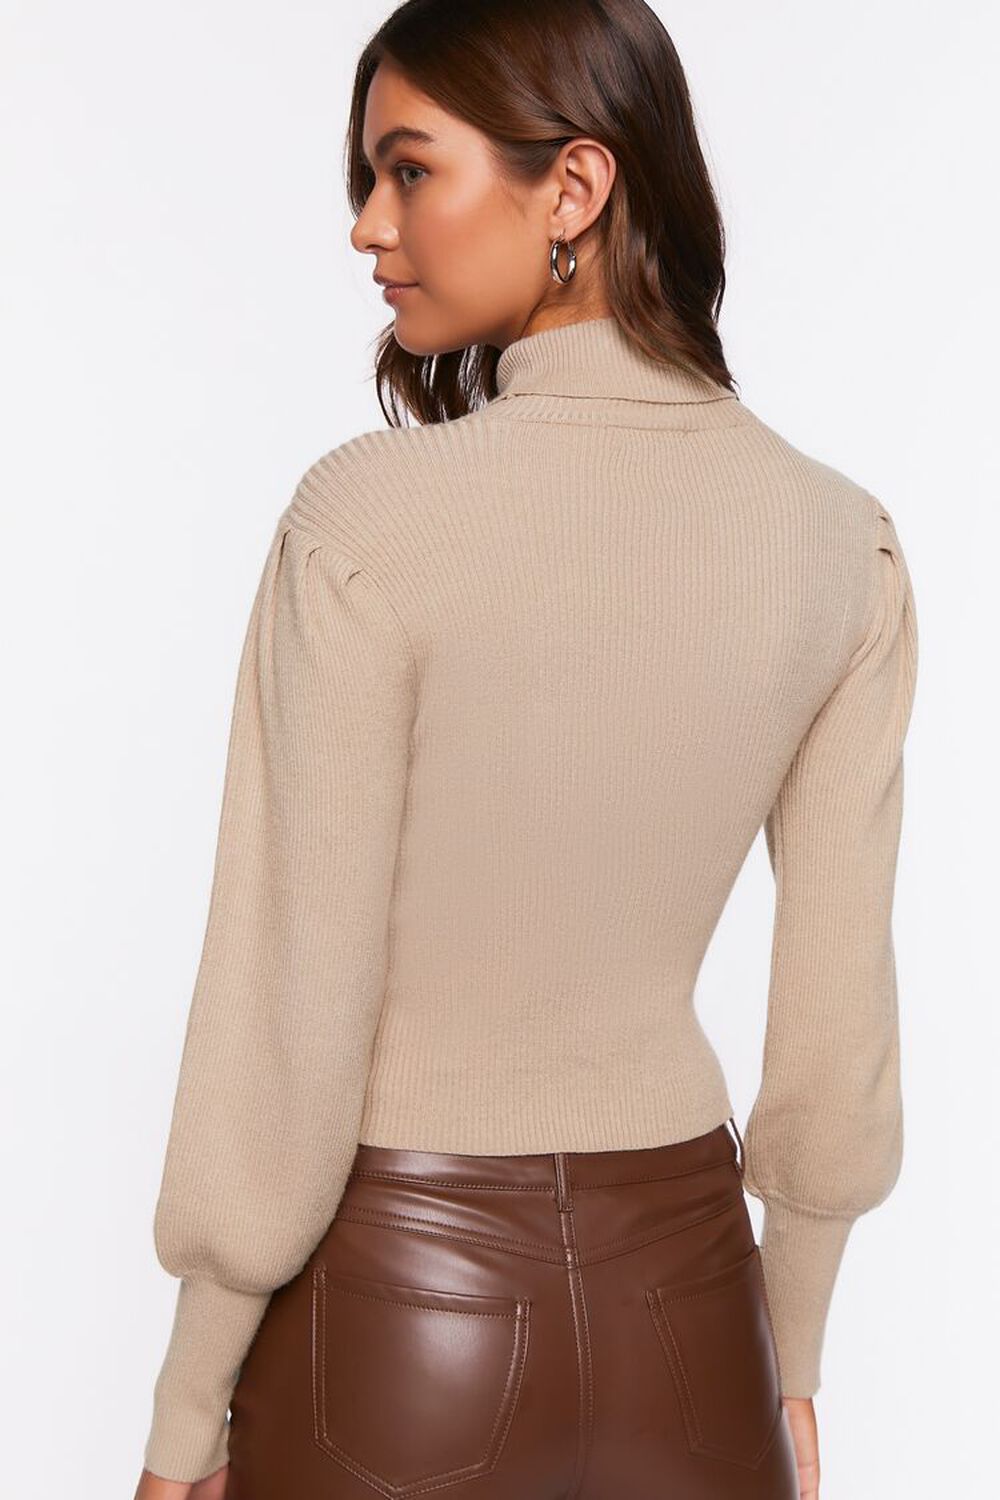 TAUPE Long-Sleeve Turtleneck Sweater, image 3